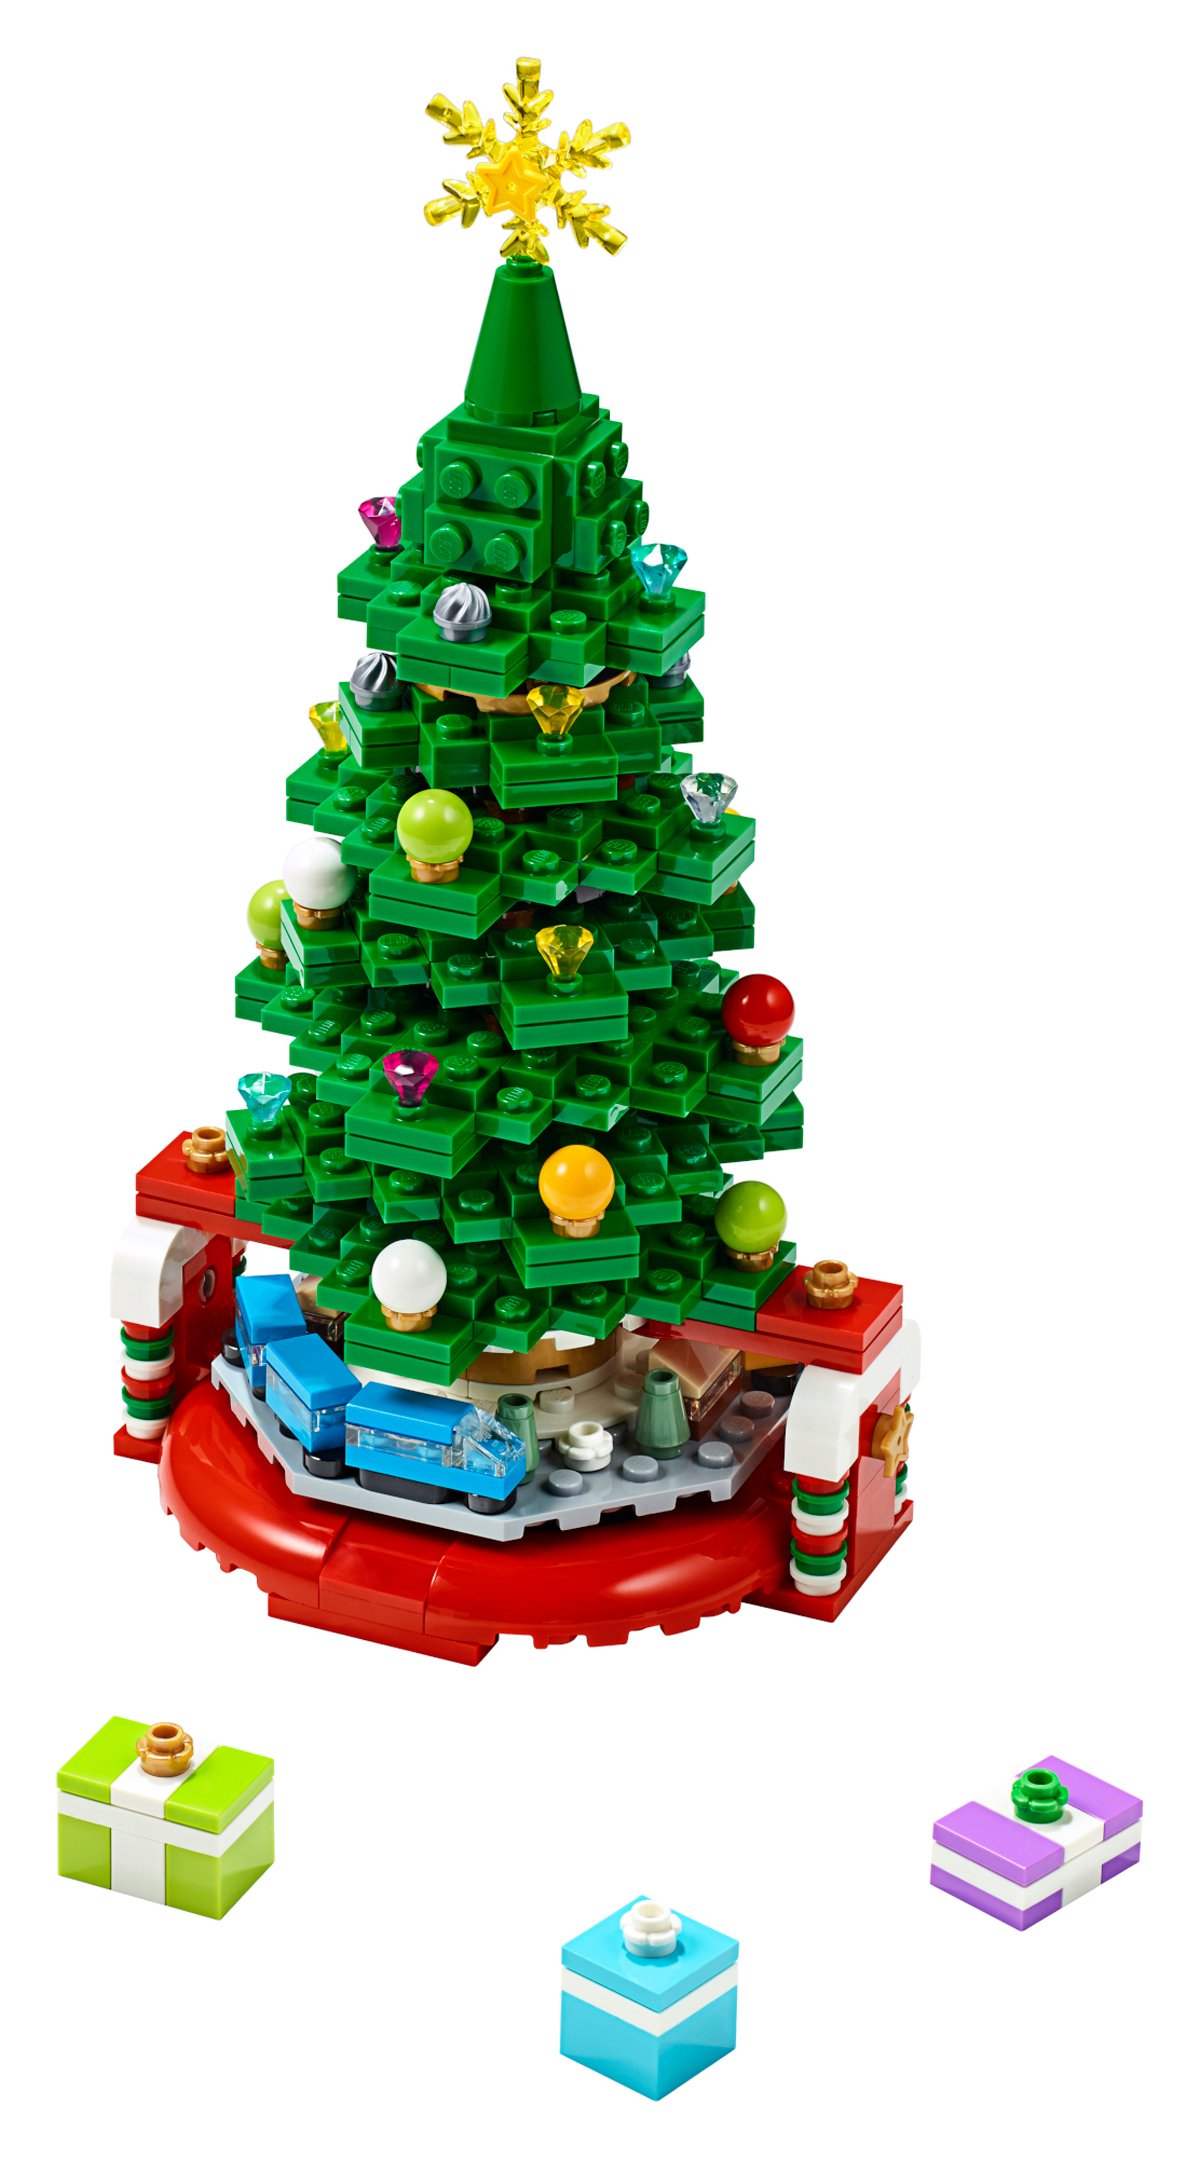 Lego Natale.Lego Seasonal Limited Edition Christmas Tree 40338 Revealed The Brick Fan